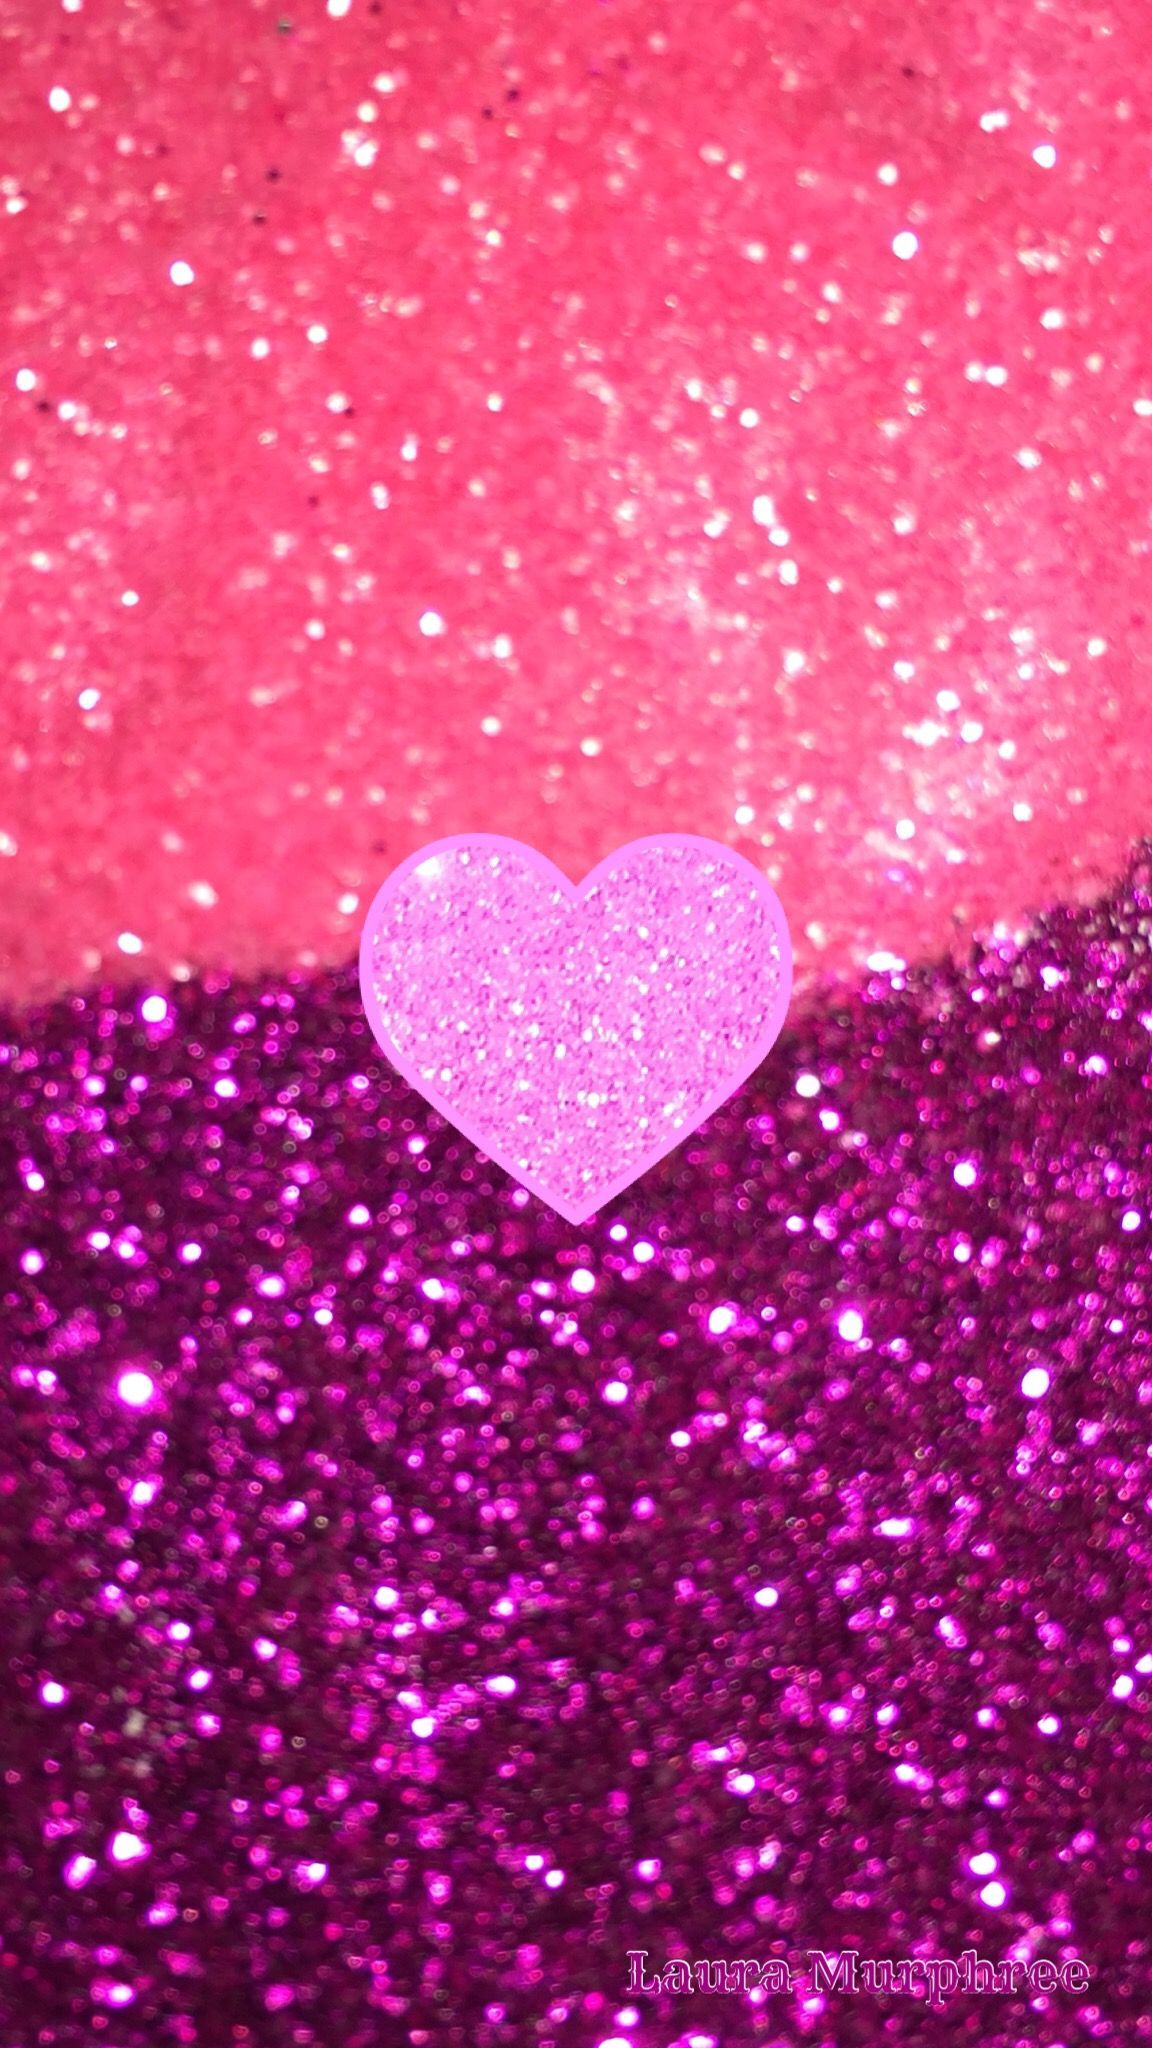 Glitter phone wallpaper sparkle background sparkling bling shimmer sparkles glitter glittery. Glitter phone wallpaper, Pink wallpaper iphone, Sparkles background